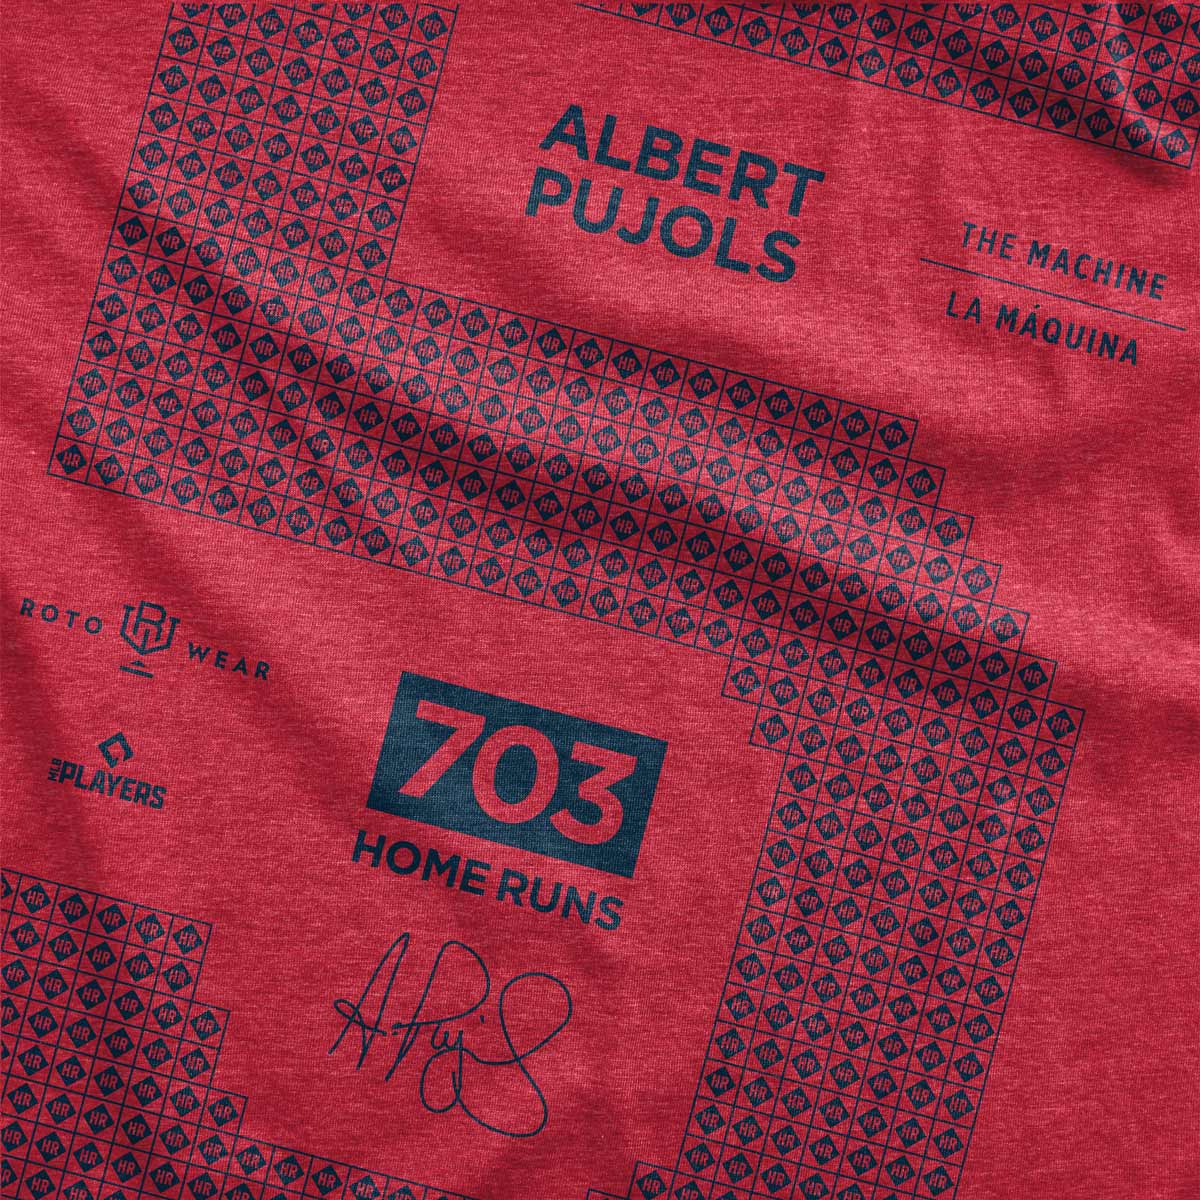 St. Louis Cardinals Rotowear Albert Pujols 701 Home Runs Shirts